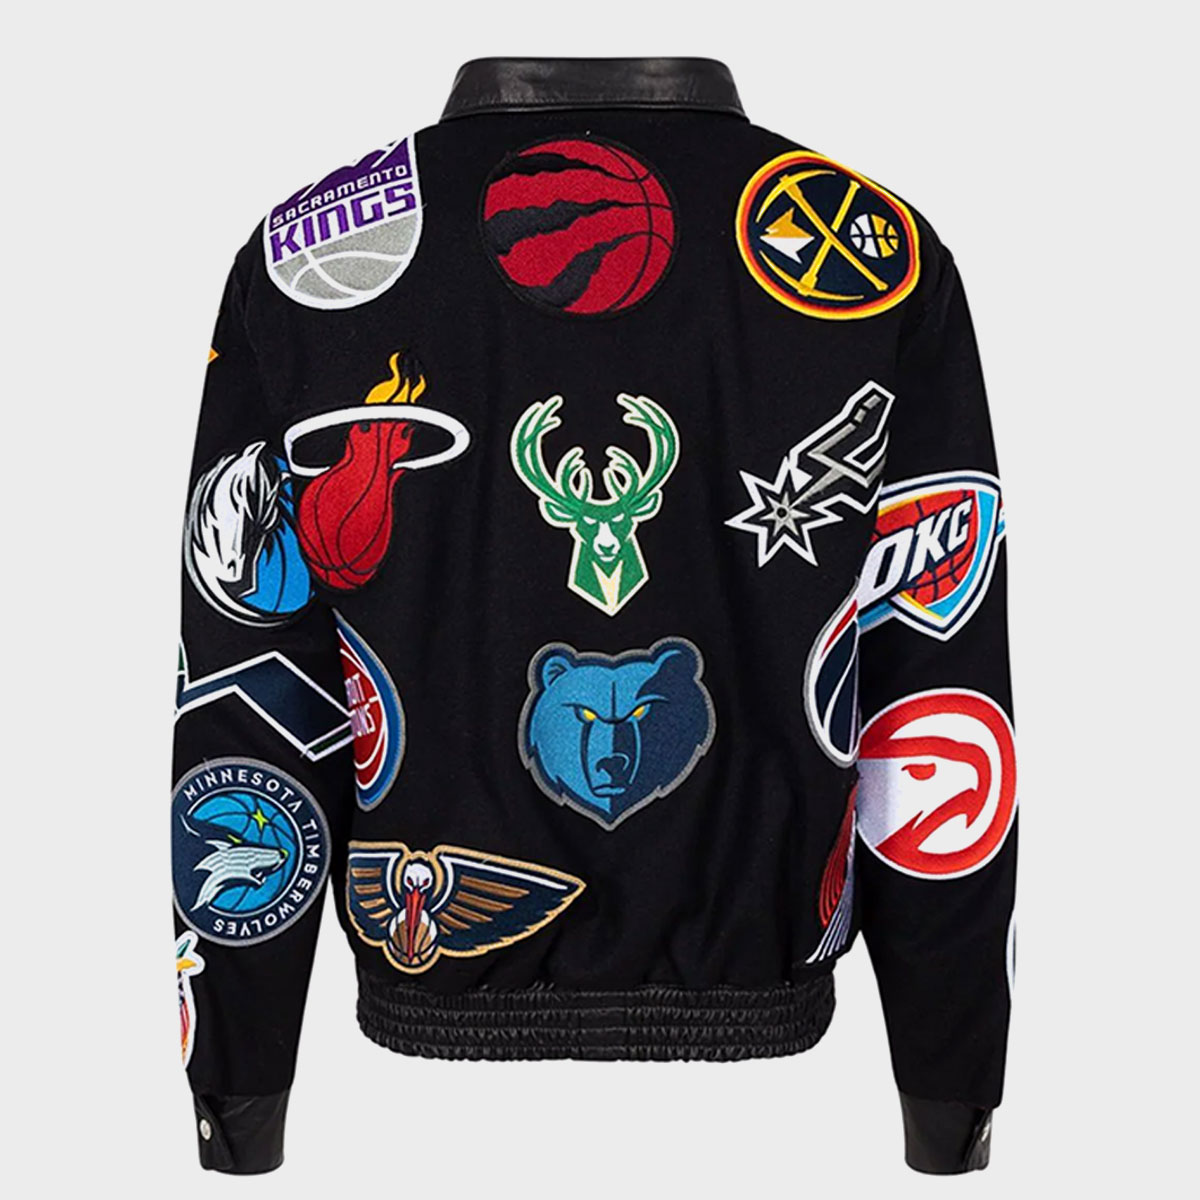 x-NBA-black-Collage-wool-jacket774dsd